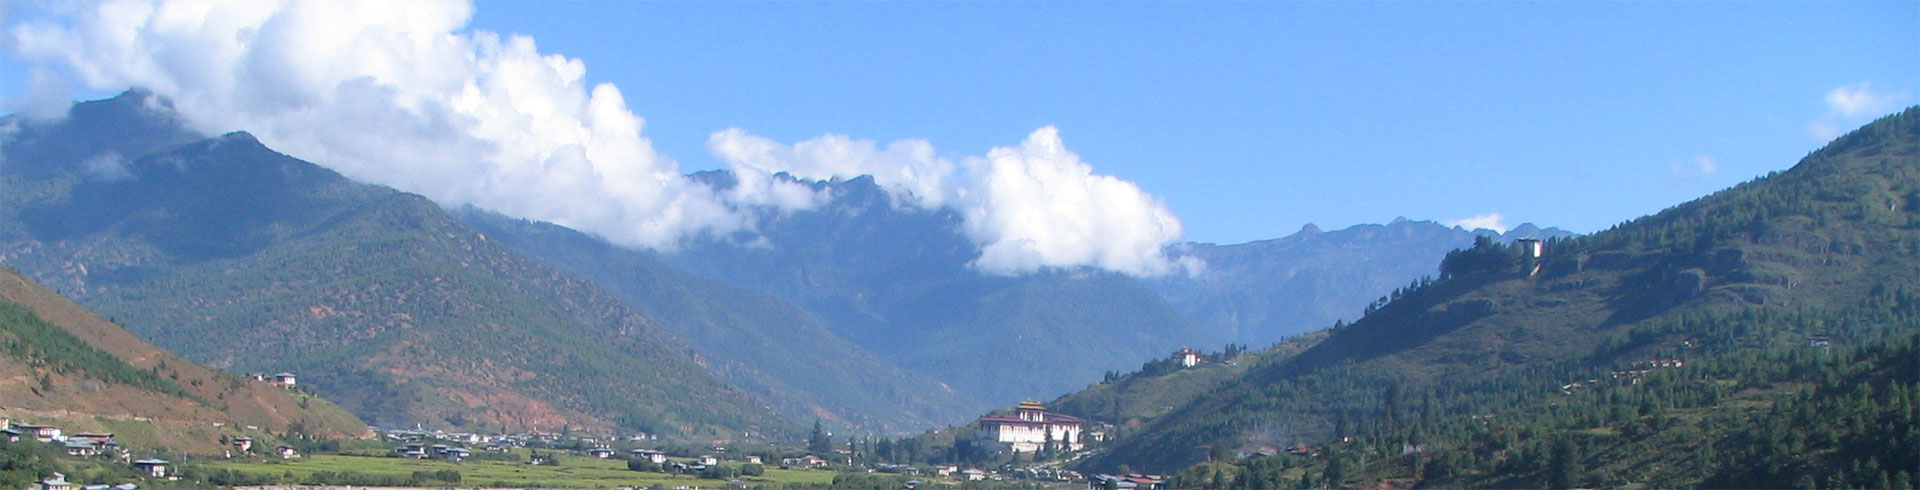 paro valley